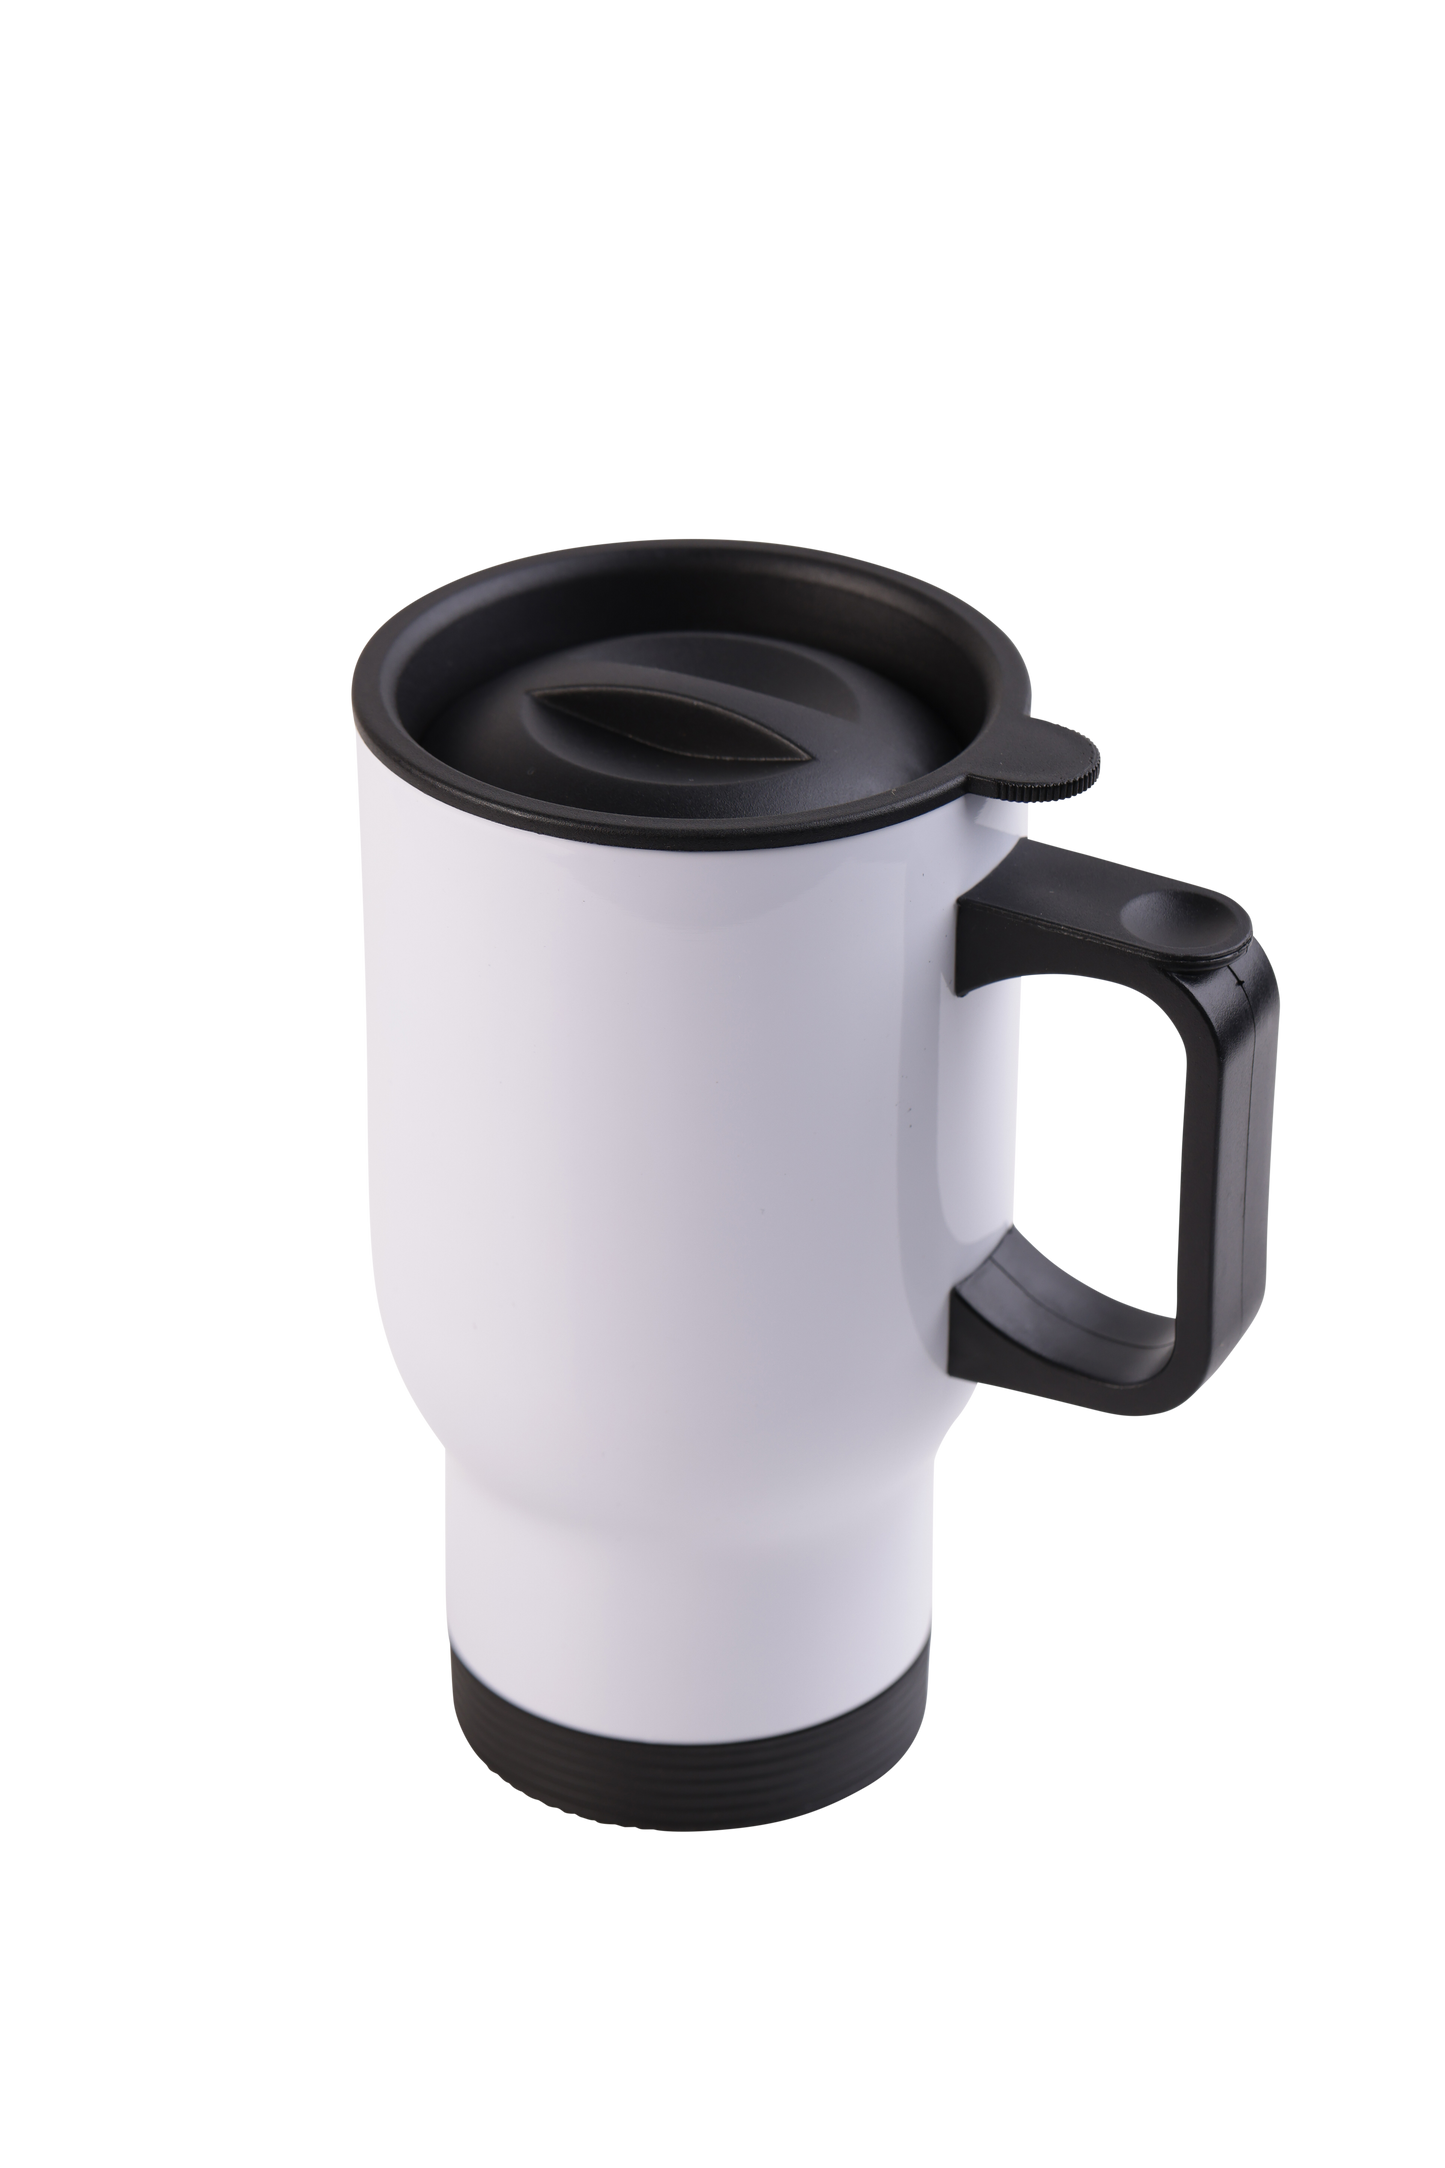 (36 PACK)-14 OZ stainless steel, white Color,Size: 14oz travel mug (black lids)